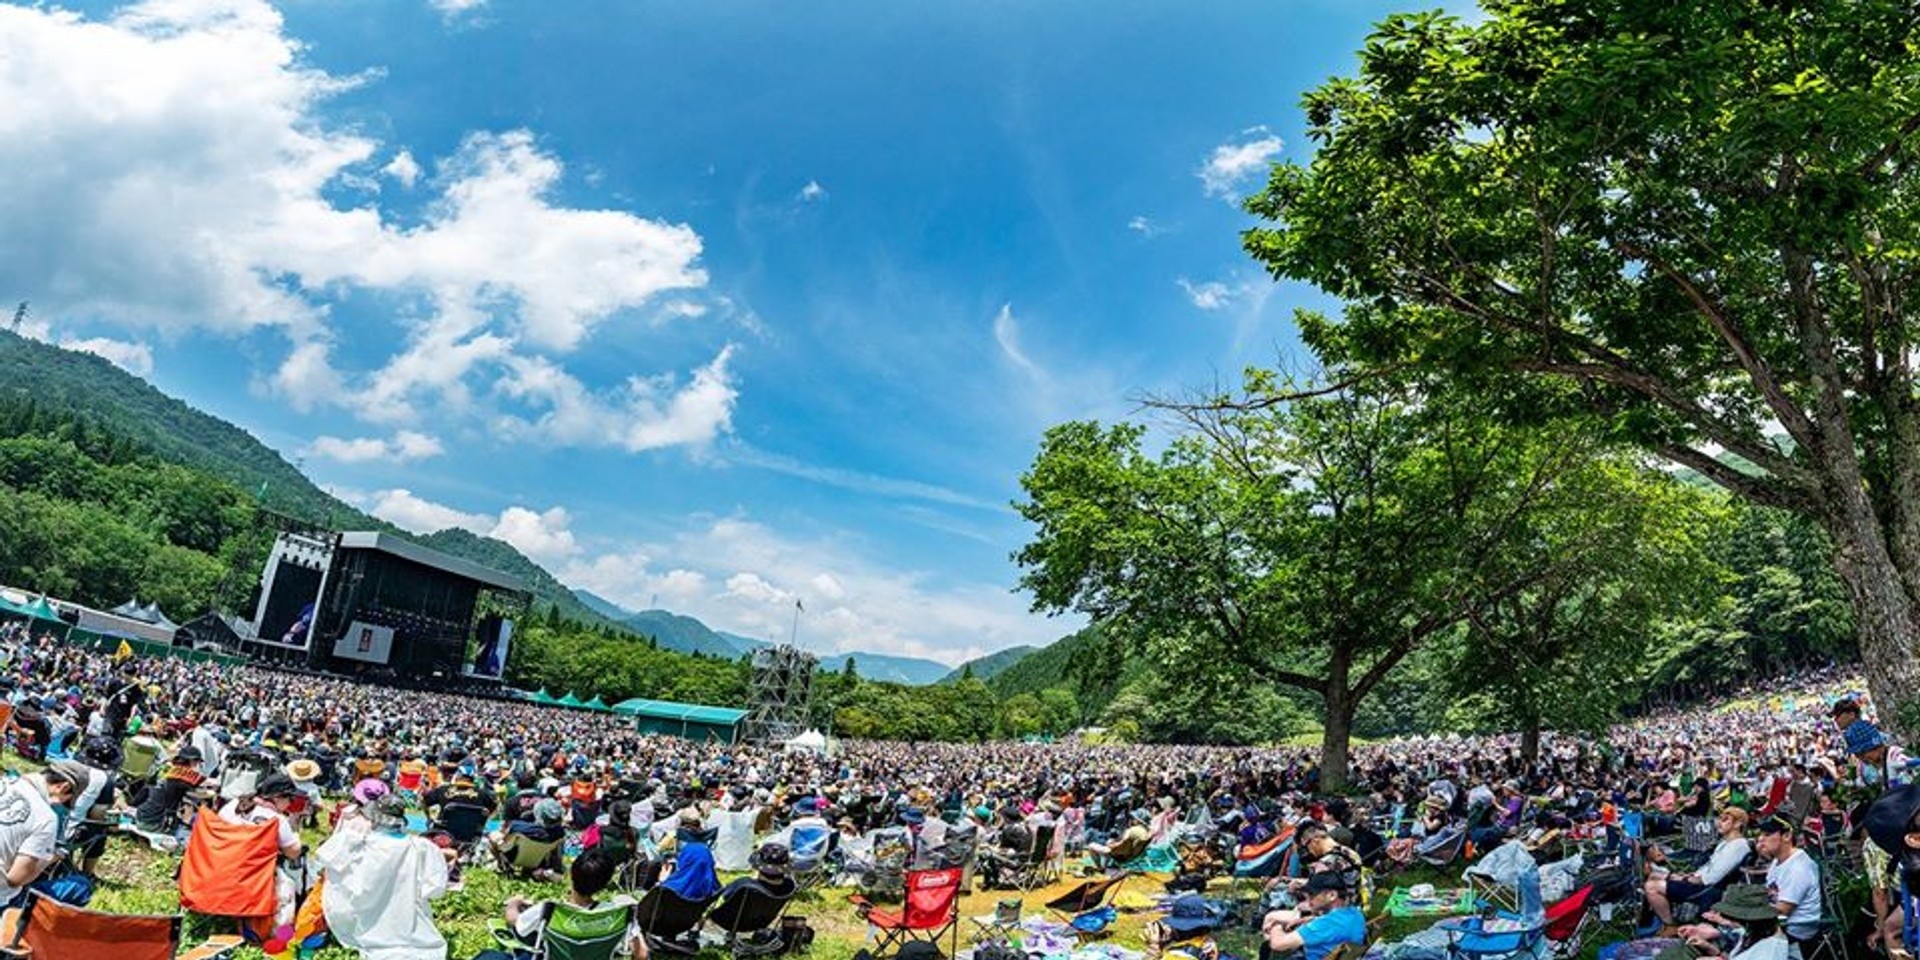 Japan's Fuji Rock Festival 2020 cancelled, confirm 2021 dates